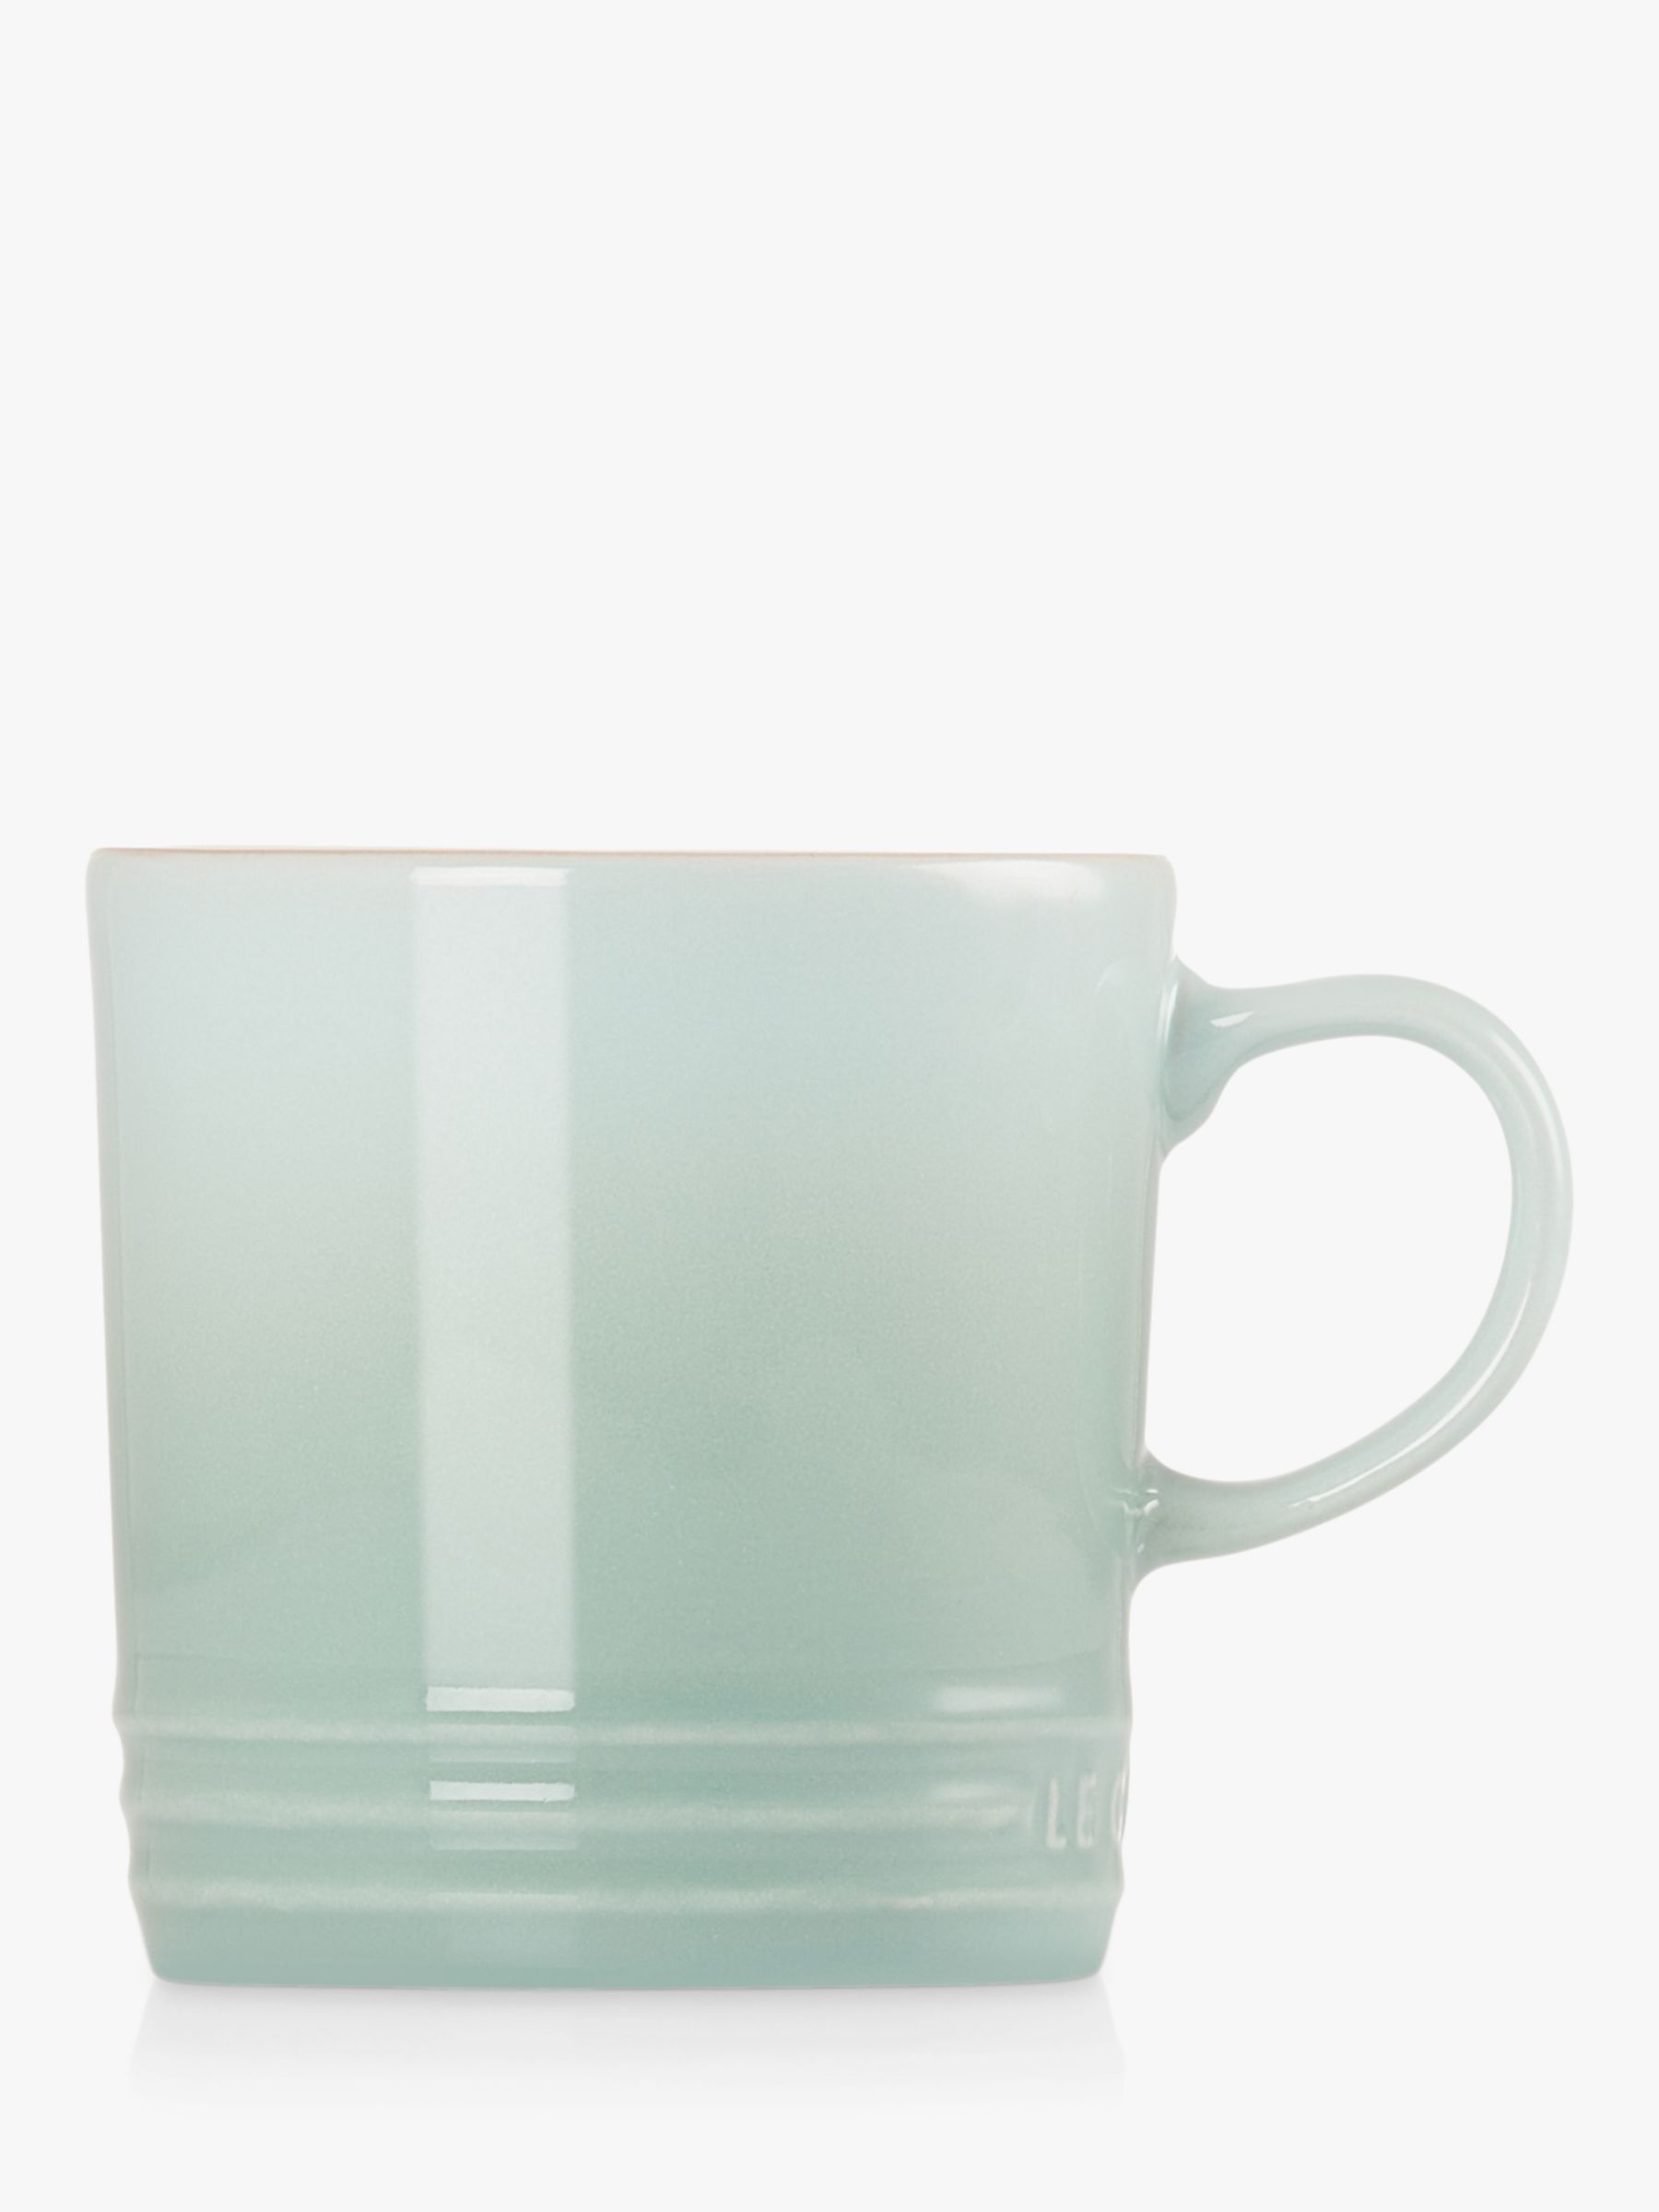 Le Creuset Stoneware Mug, 350ml, Sage Green